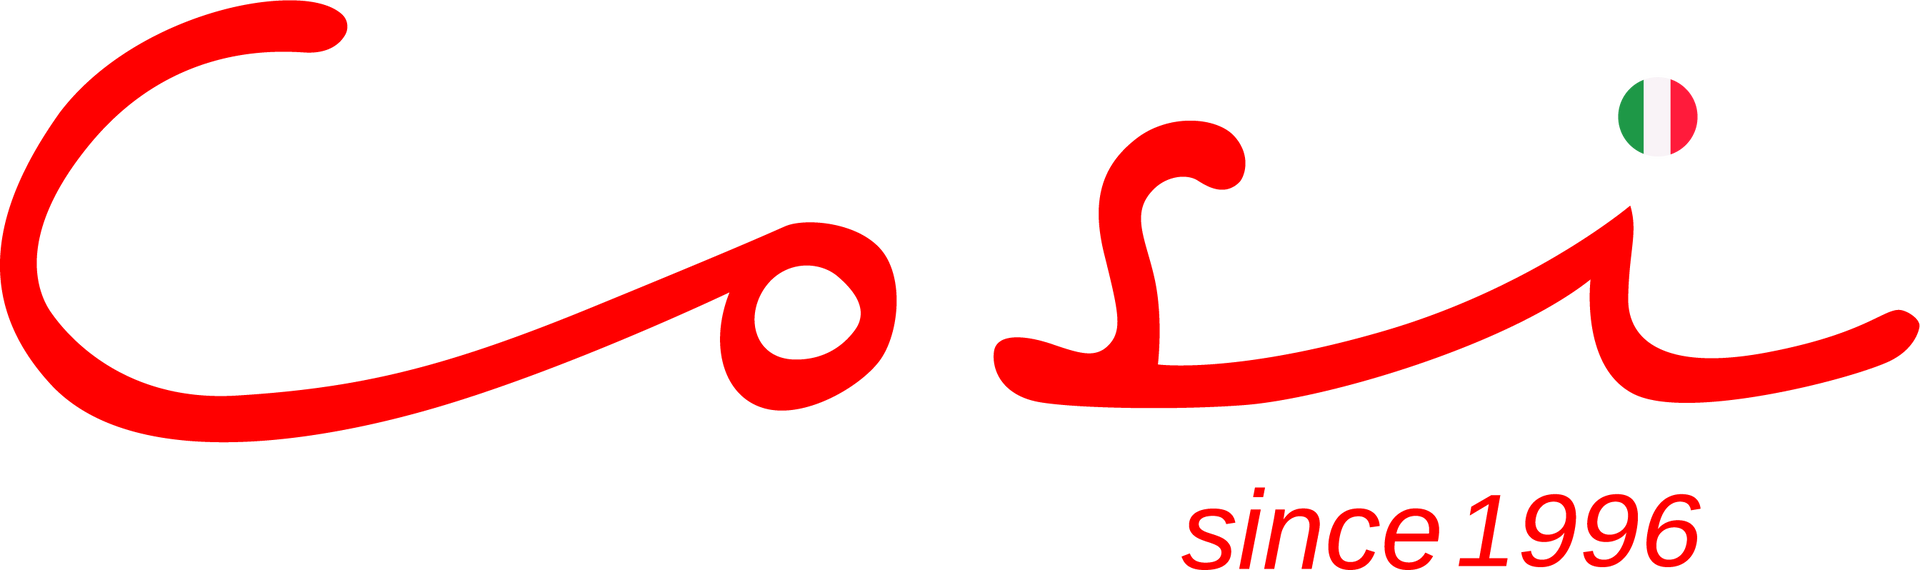 Cosi Bar Ristorante Logo